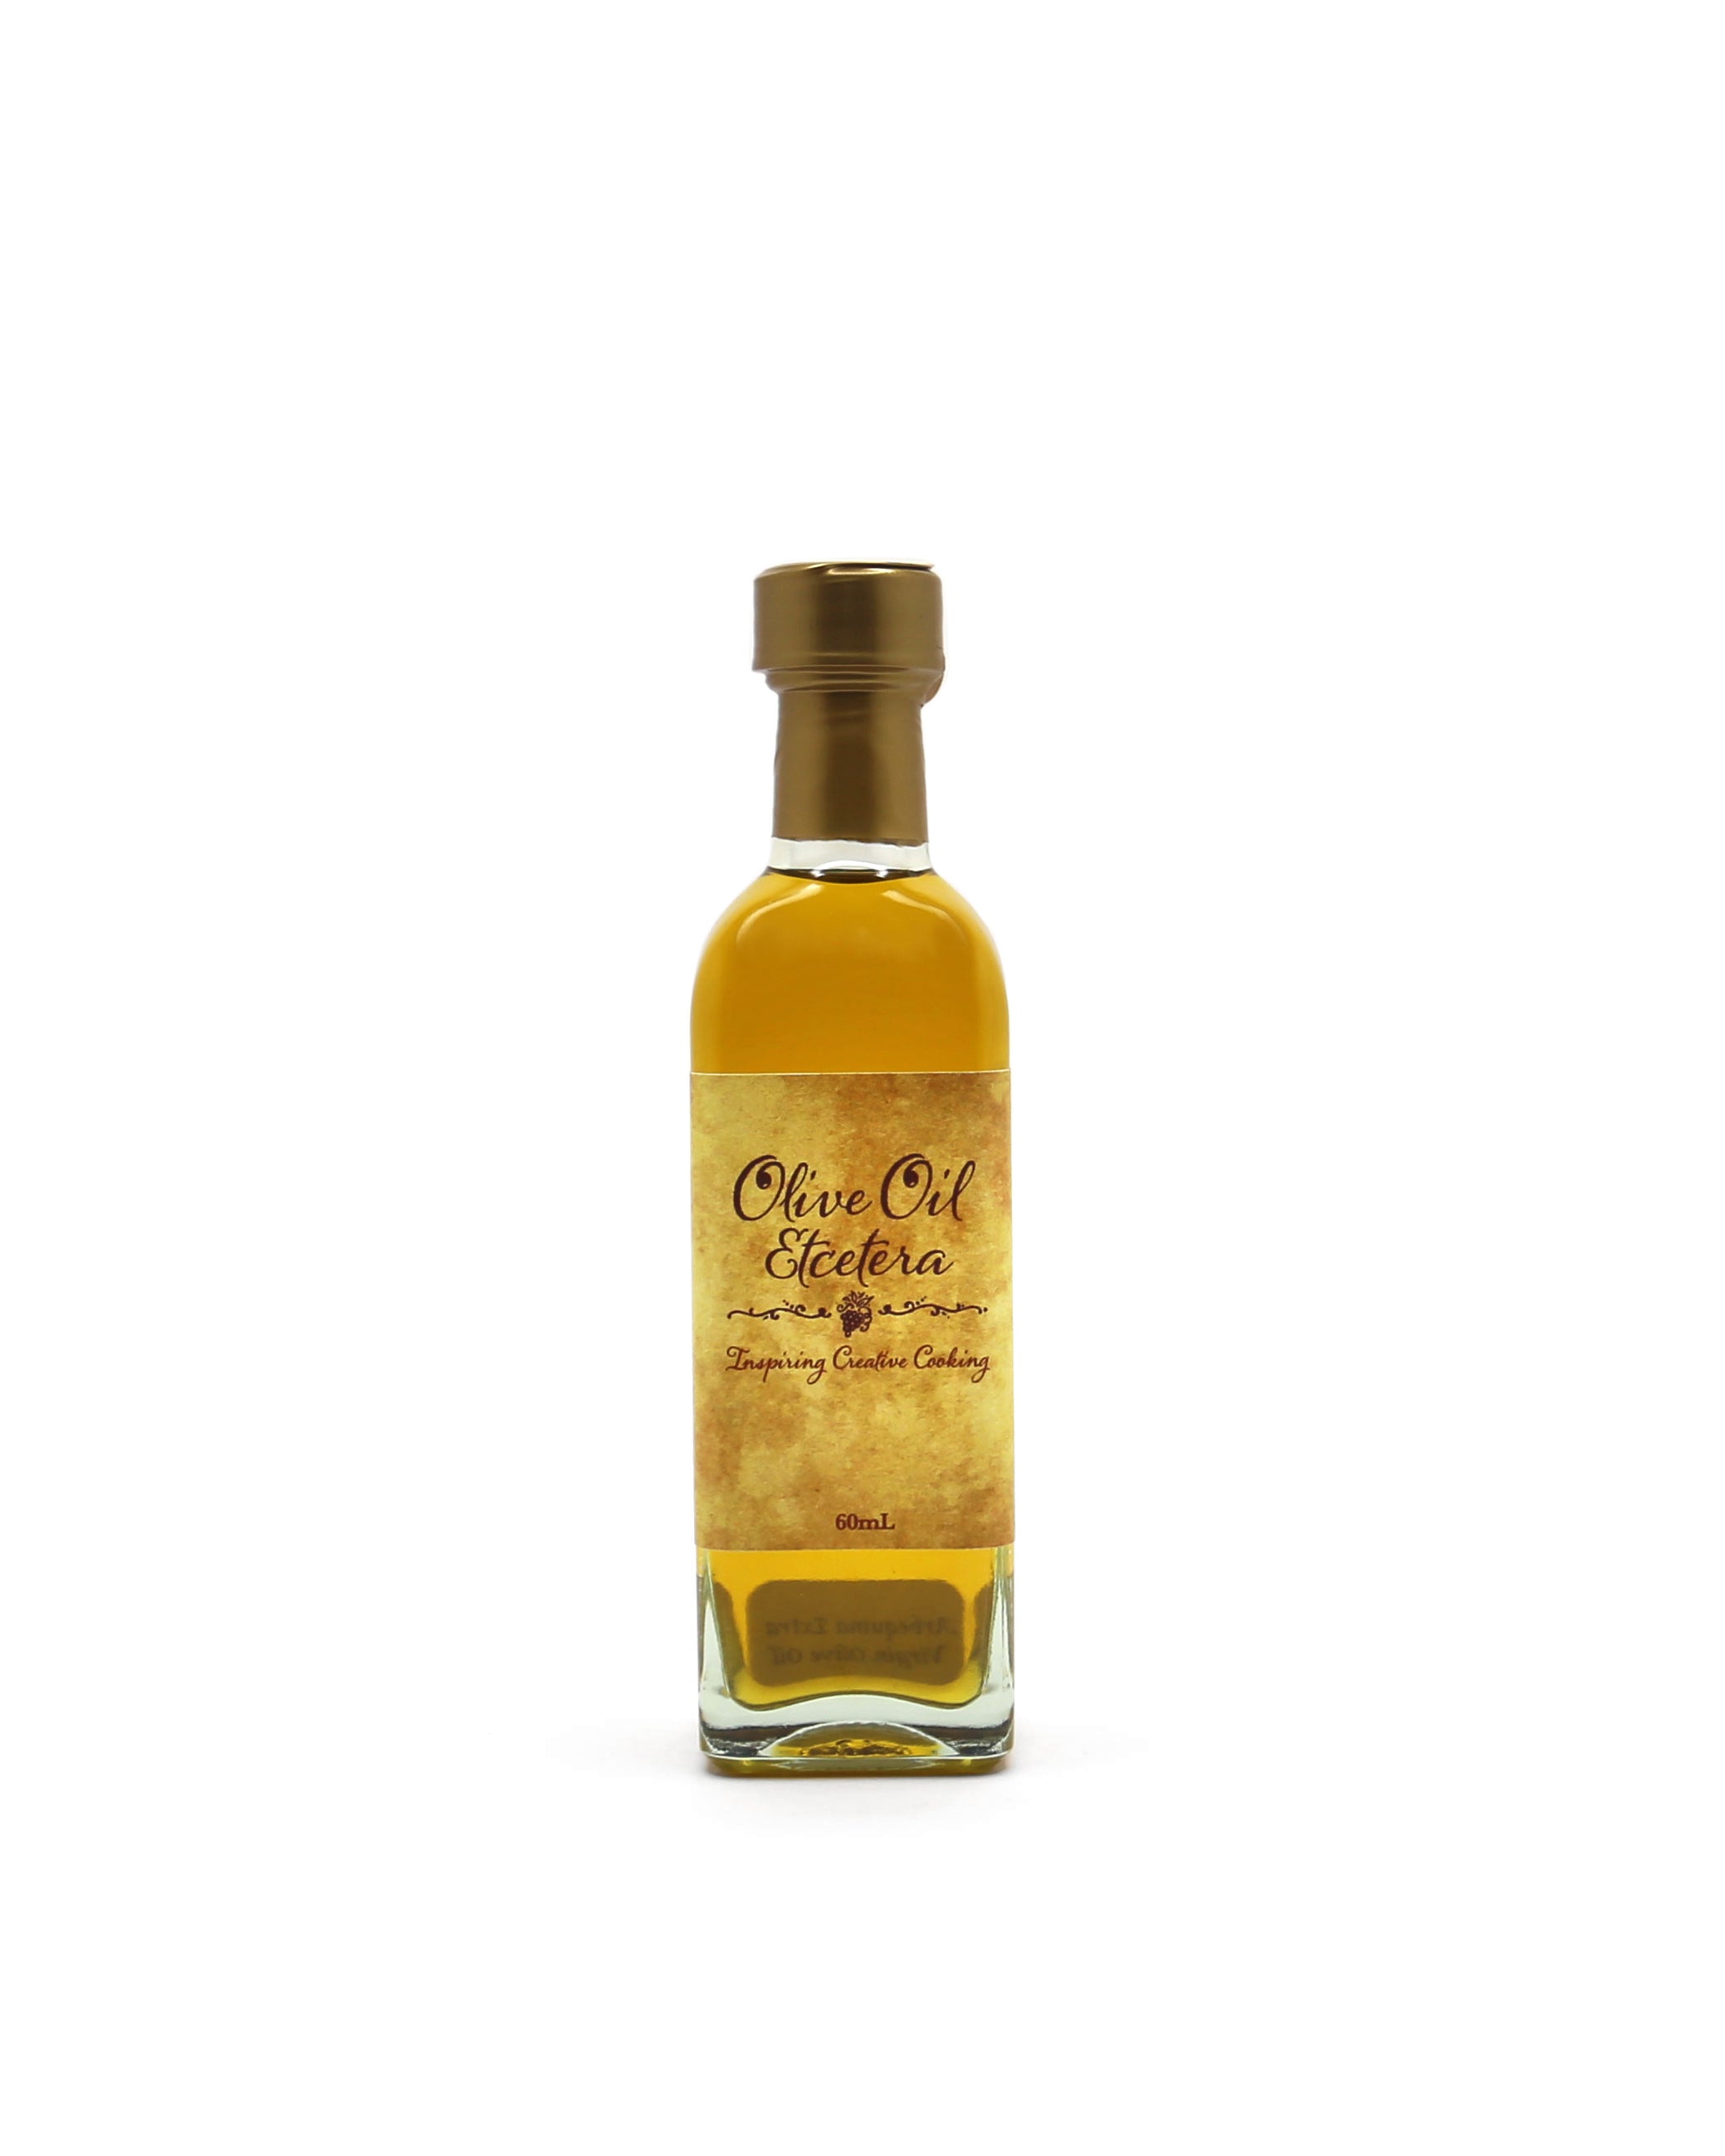 Jalapeno Garlic Olive Oil - Olive Oil Etcetera - Bucks county's gourmet olive oil and vinegar shop